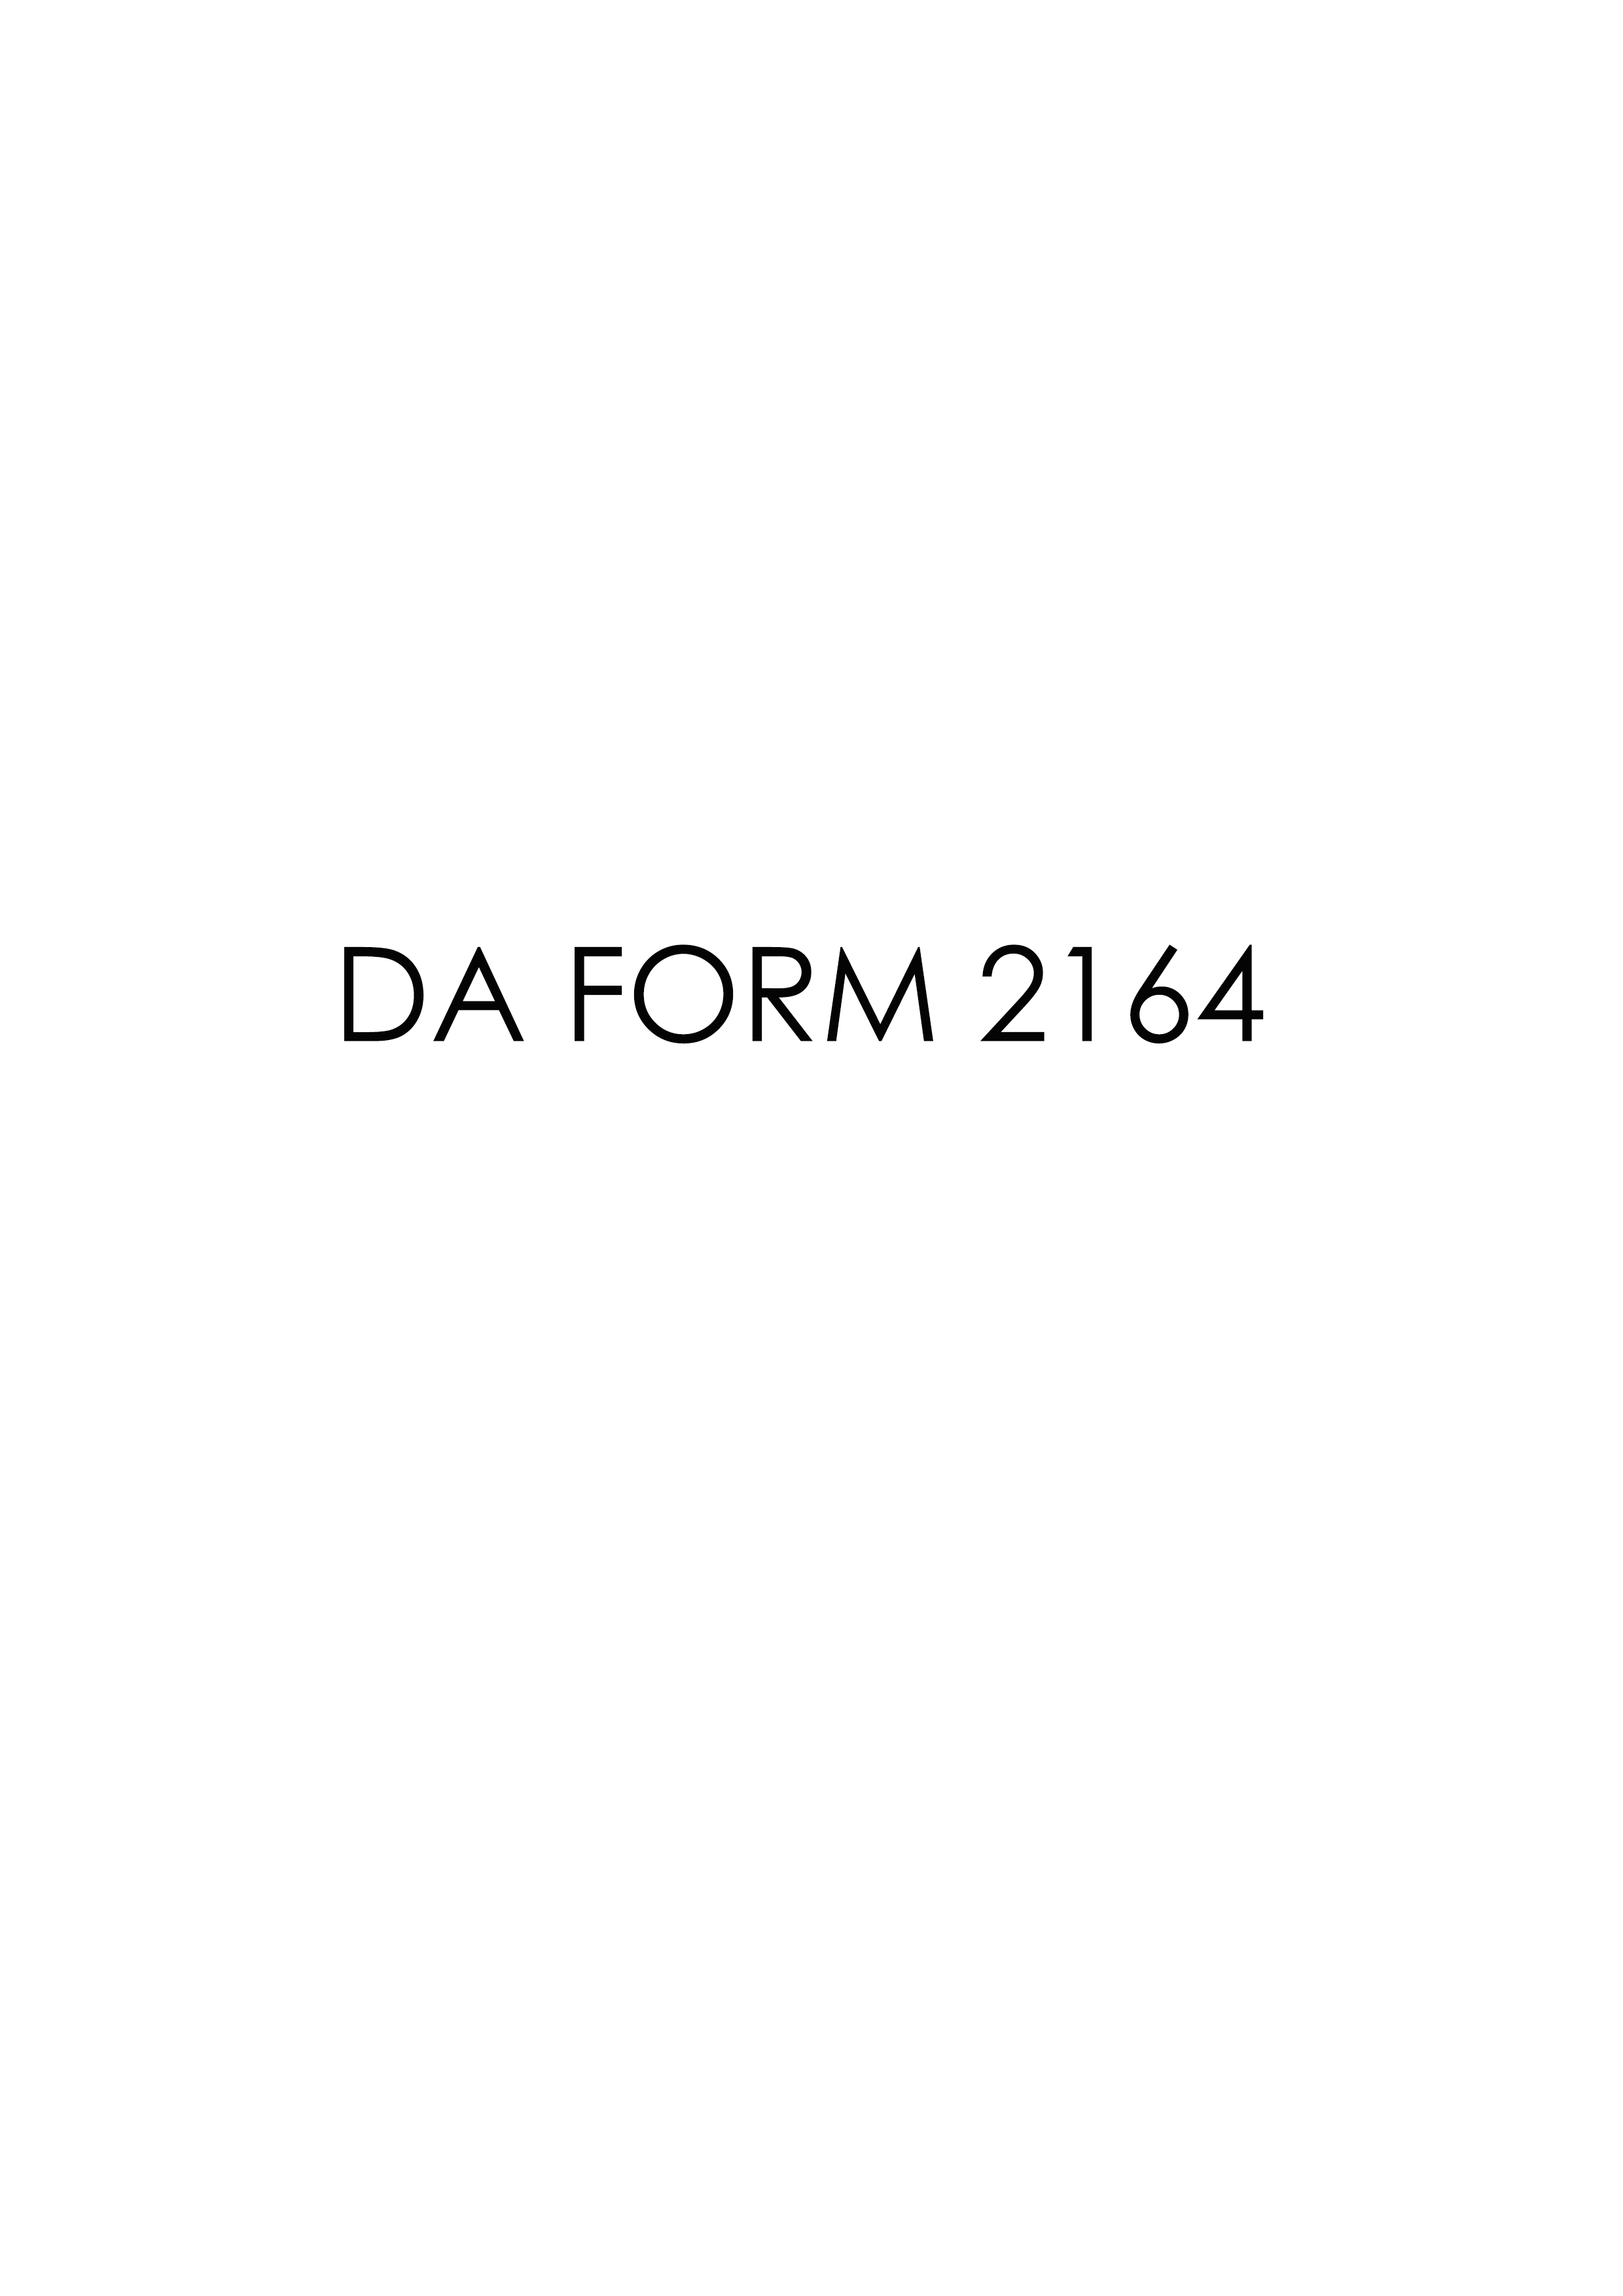 da Form 2164 fillable